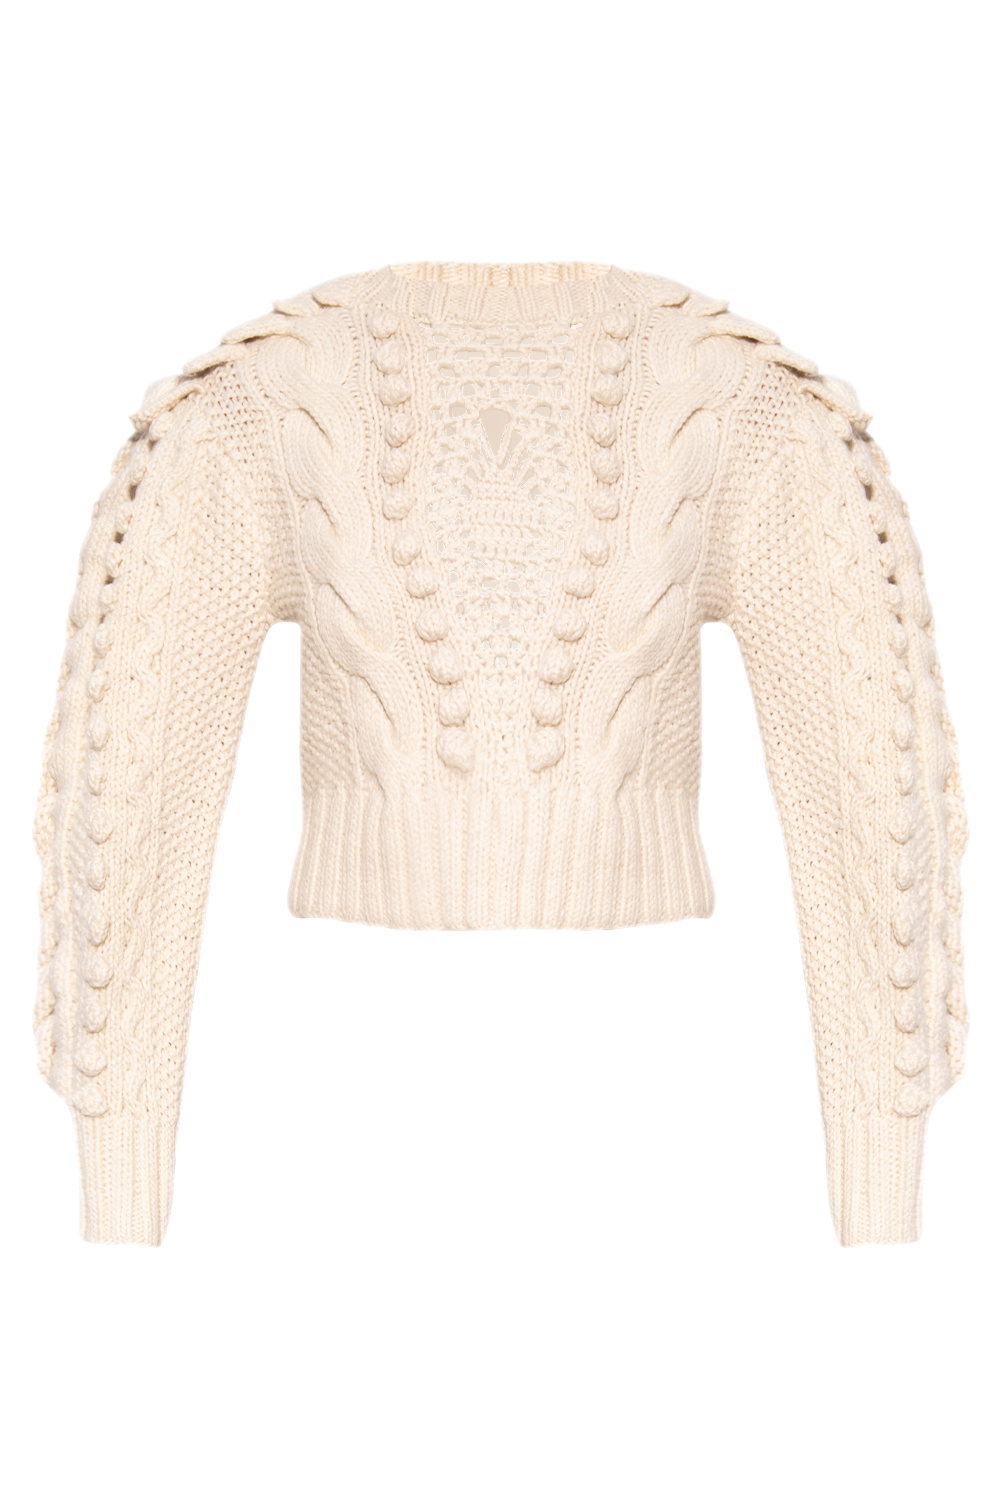 Ulla Johnson ‘Verena’ sweater